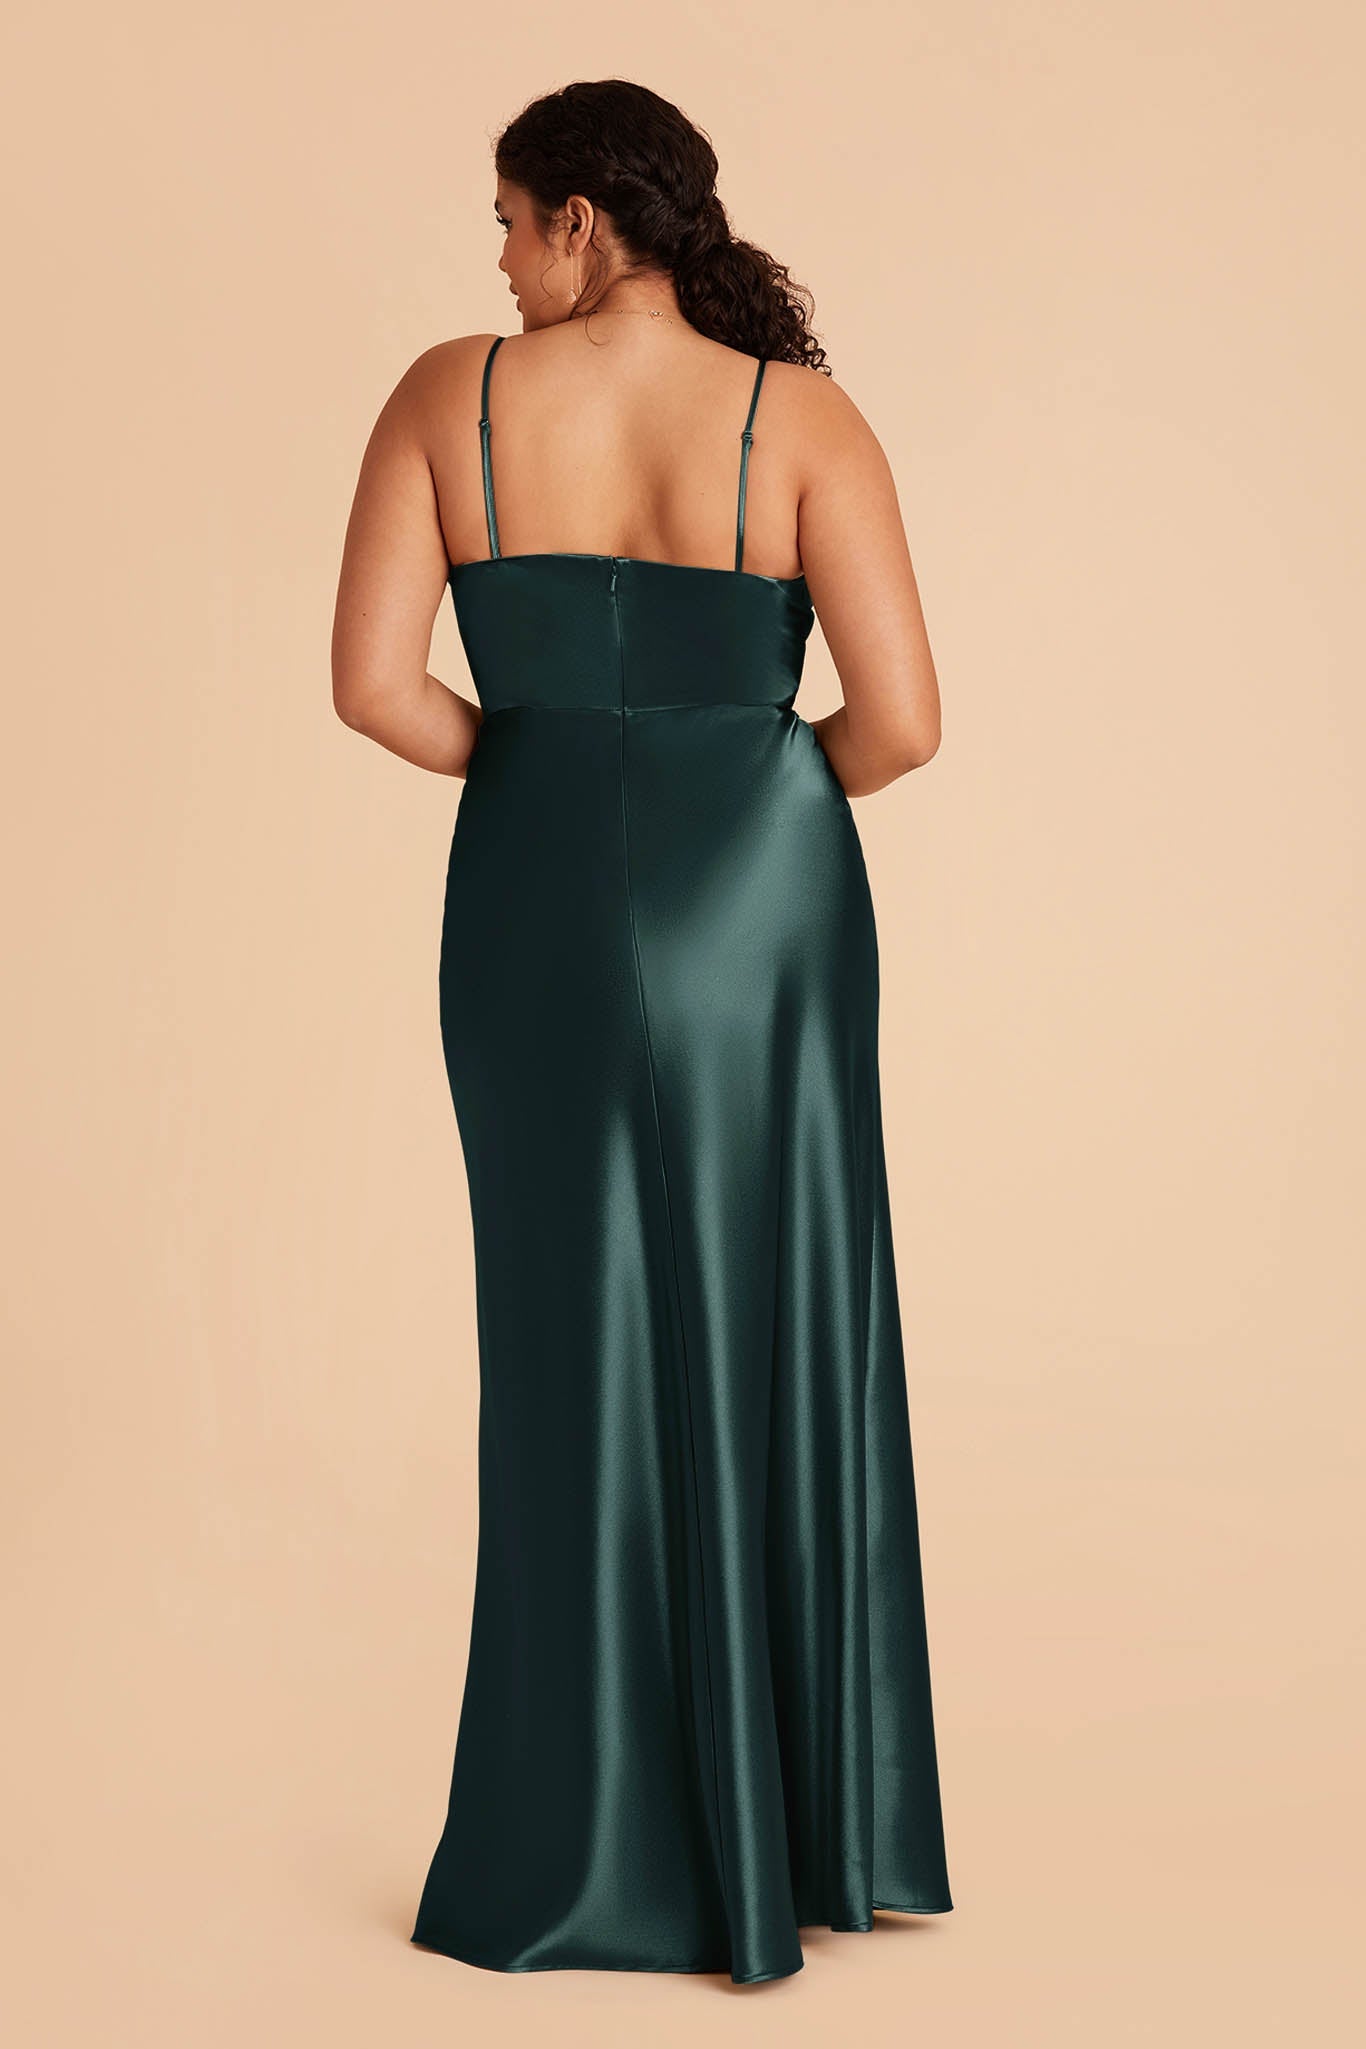 Emerald Mia Convertible Dress by Birdy Grey